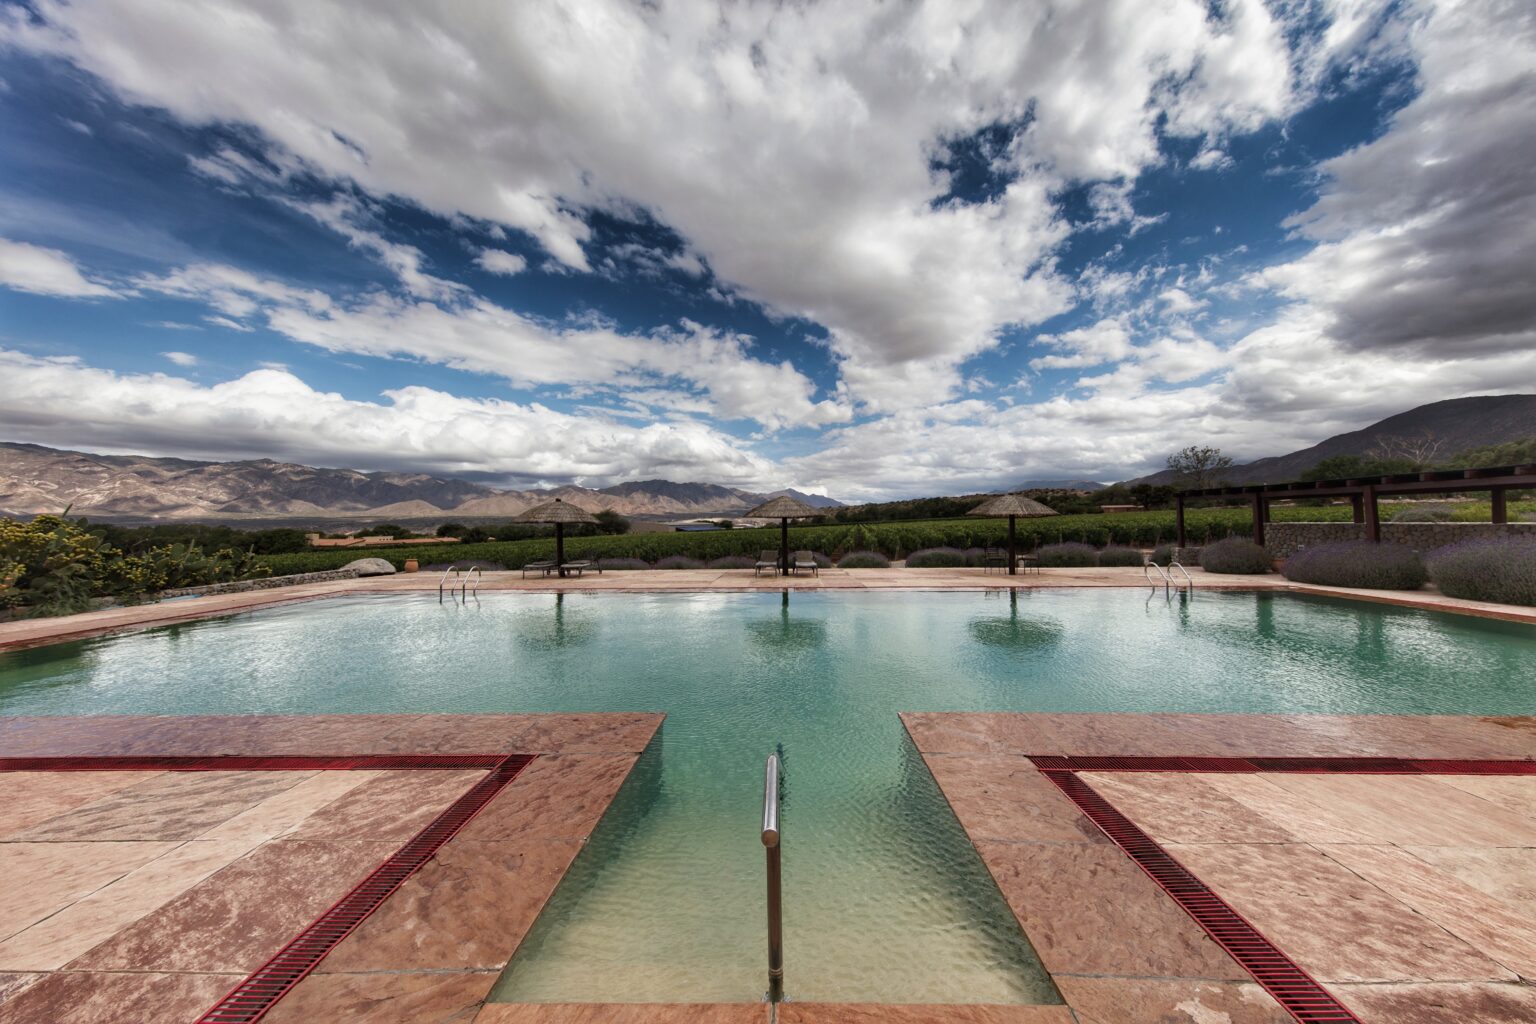 Swimming pool overlooking desert landscape